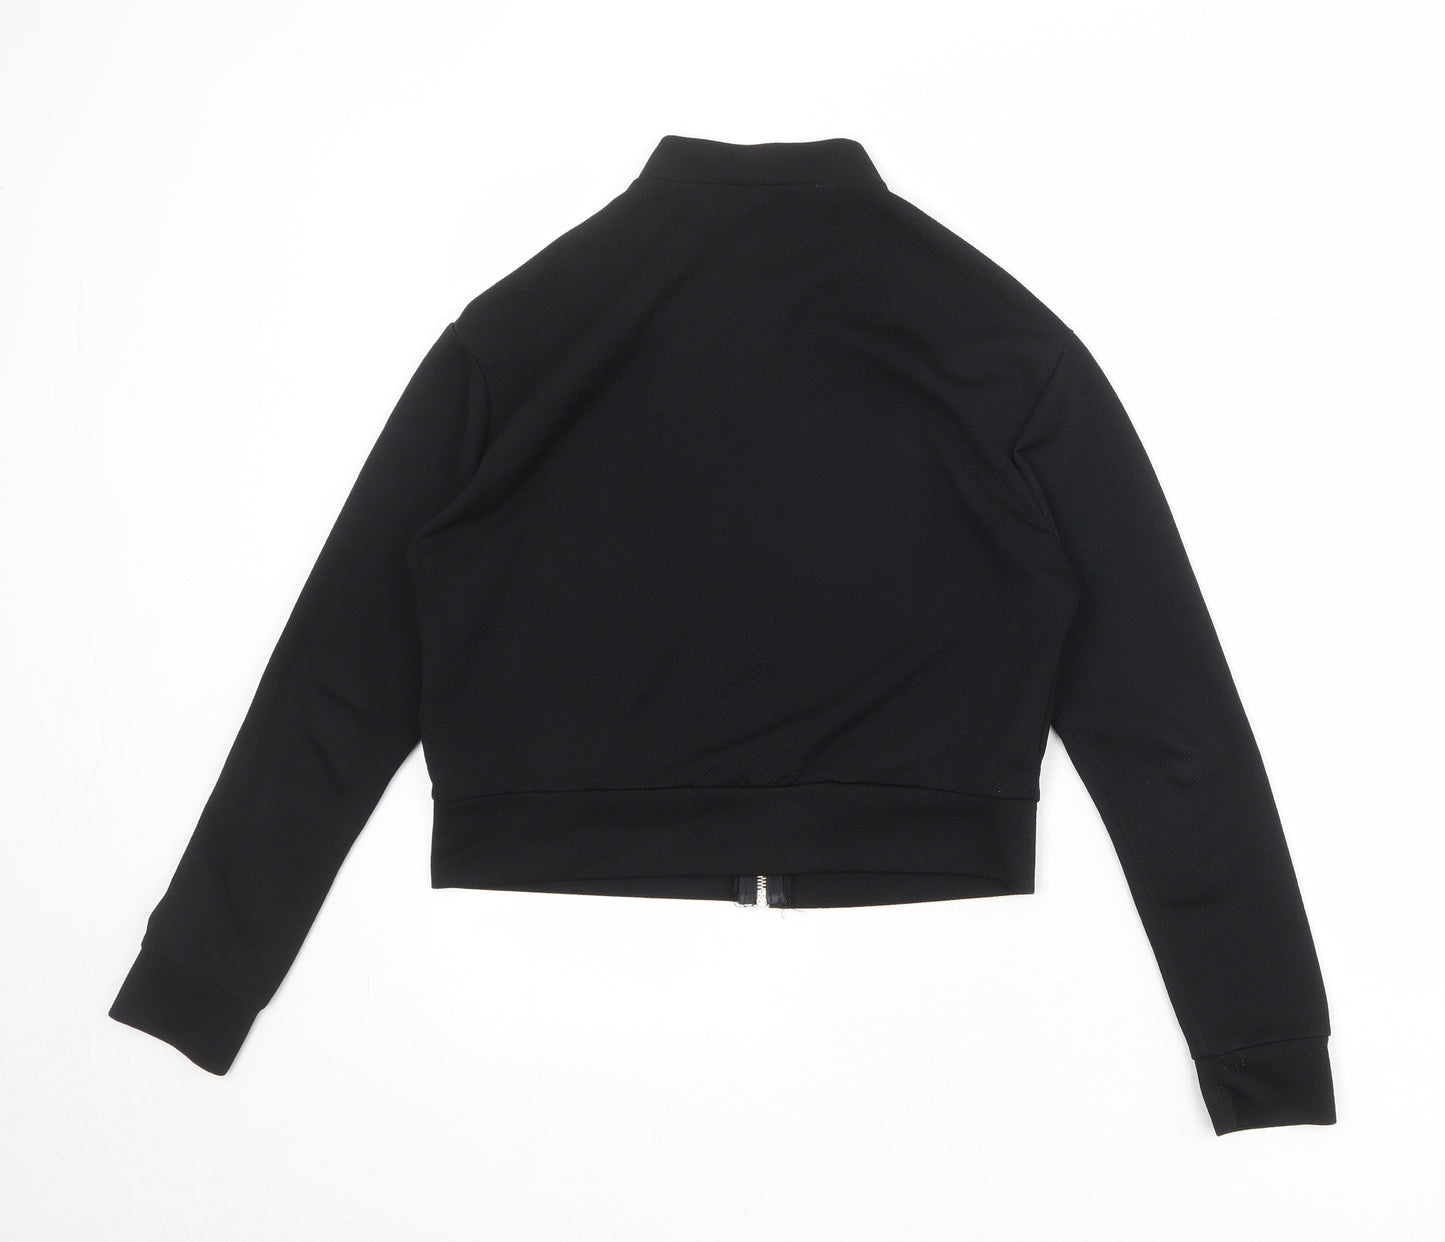 Koopoi Womens Black Jacket Size S Zip - Size S-M